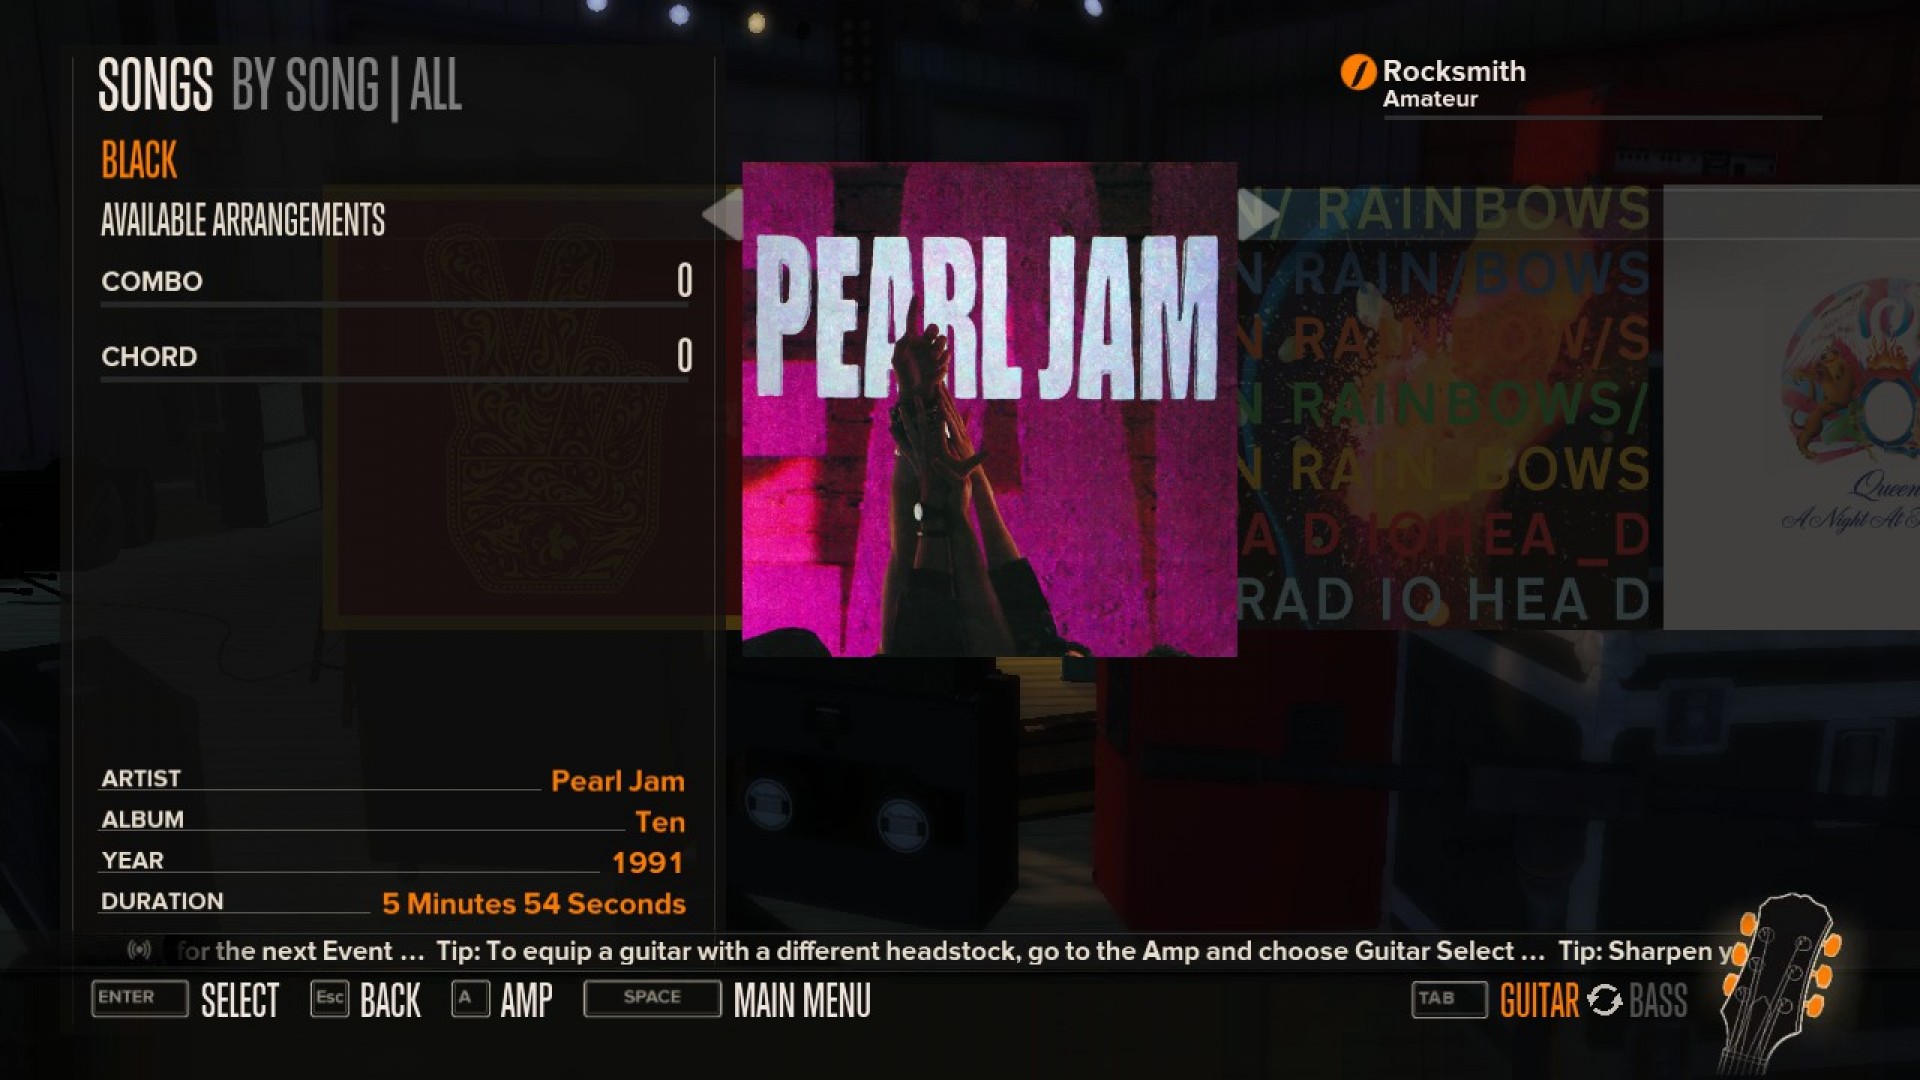 Rocksmith - Pearl Jam - Black screenshot